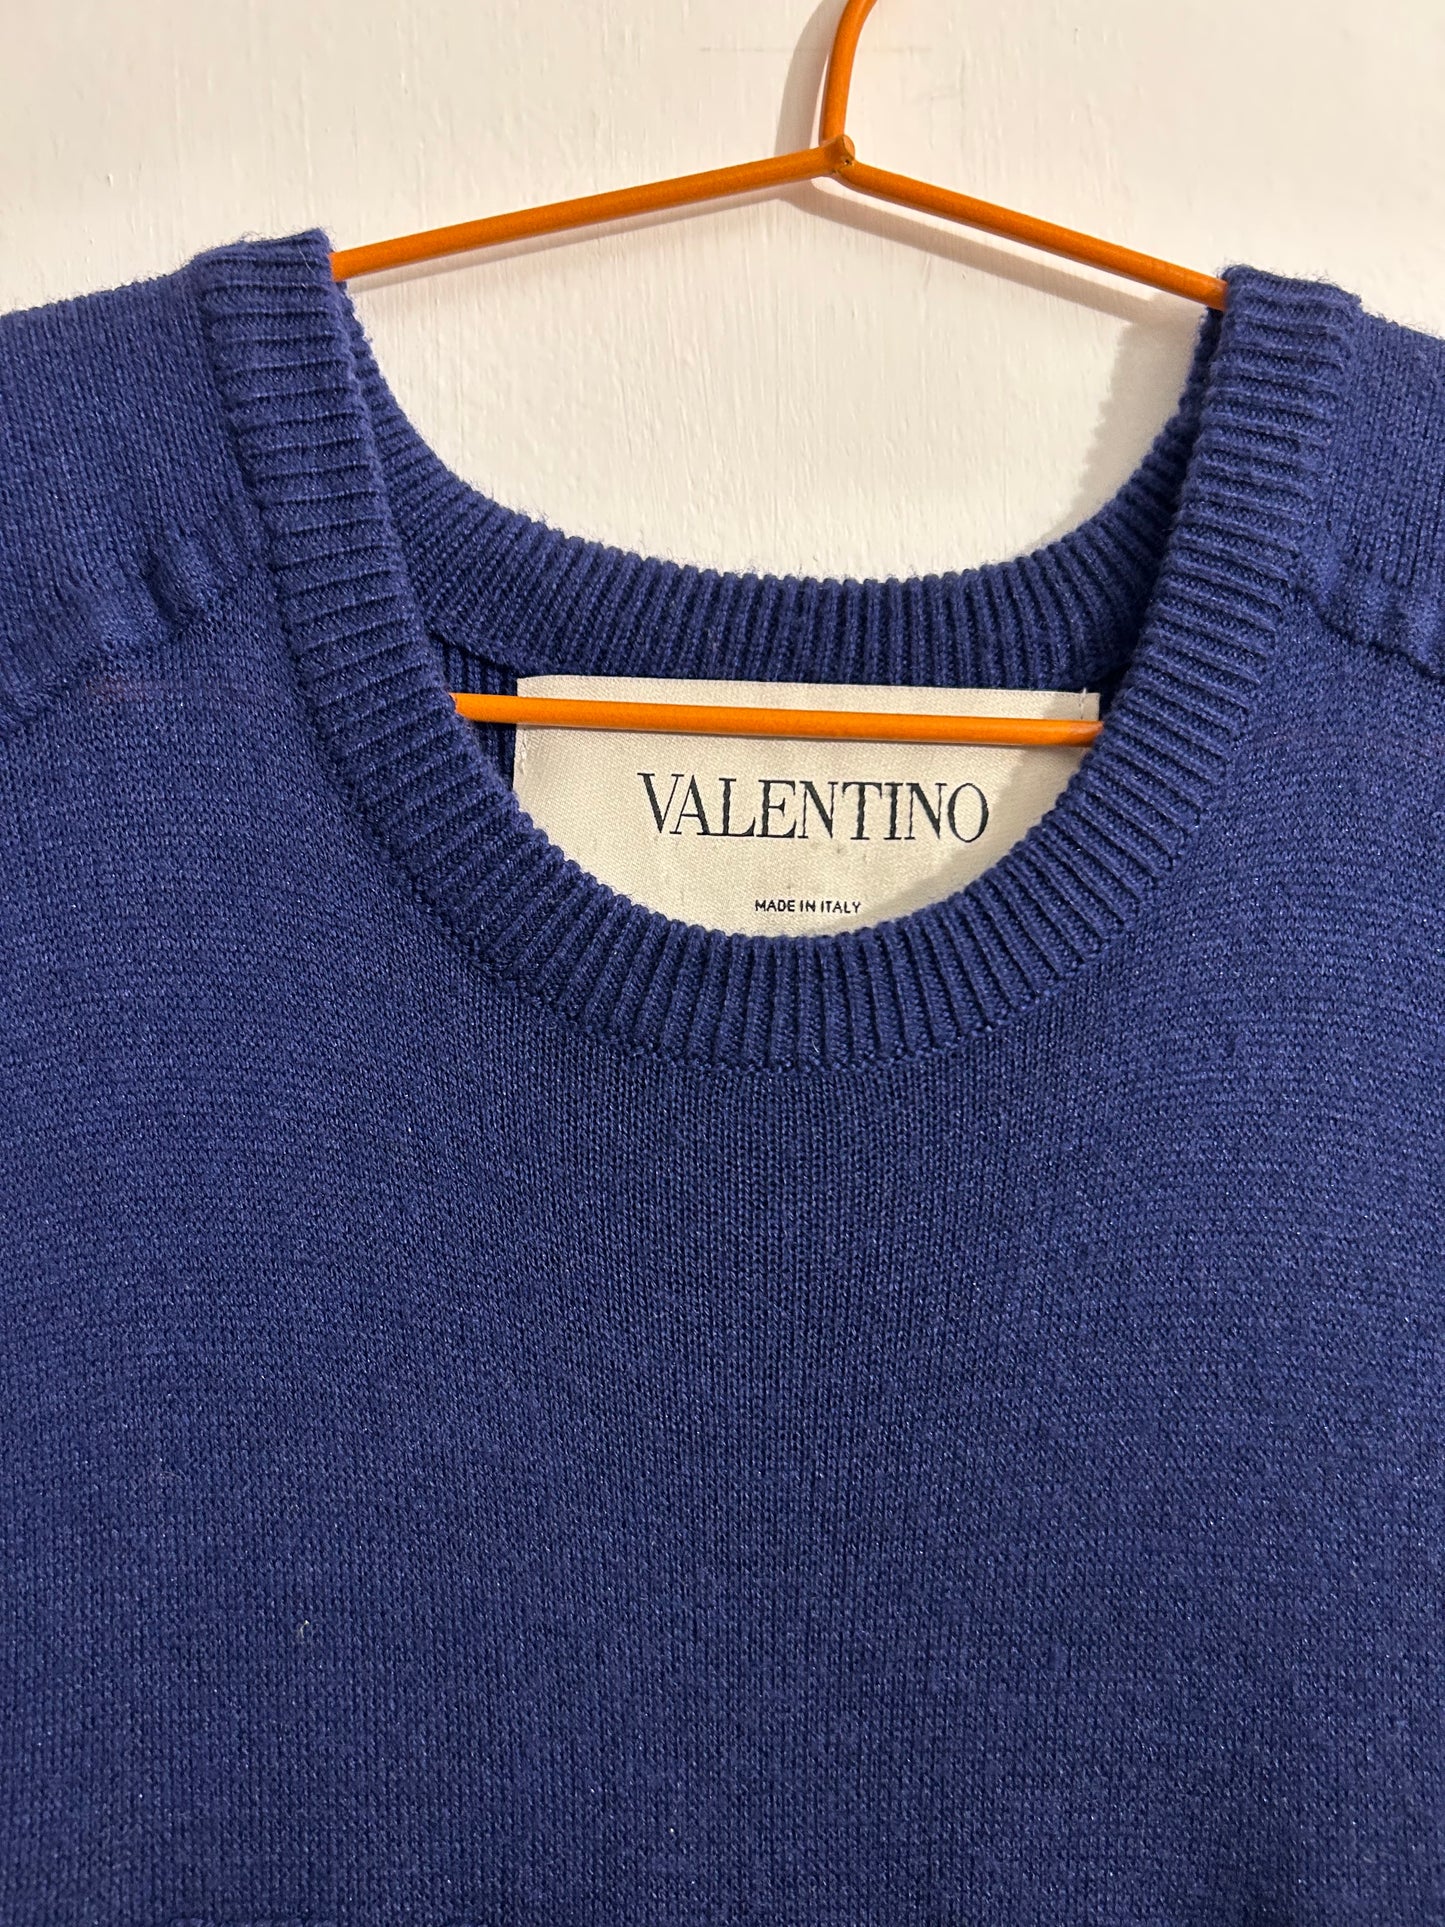 VALENTINO knitted dress